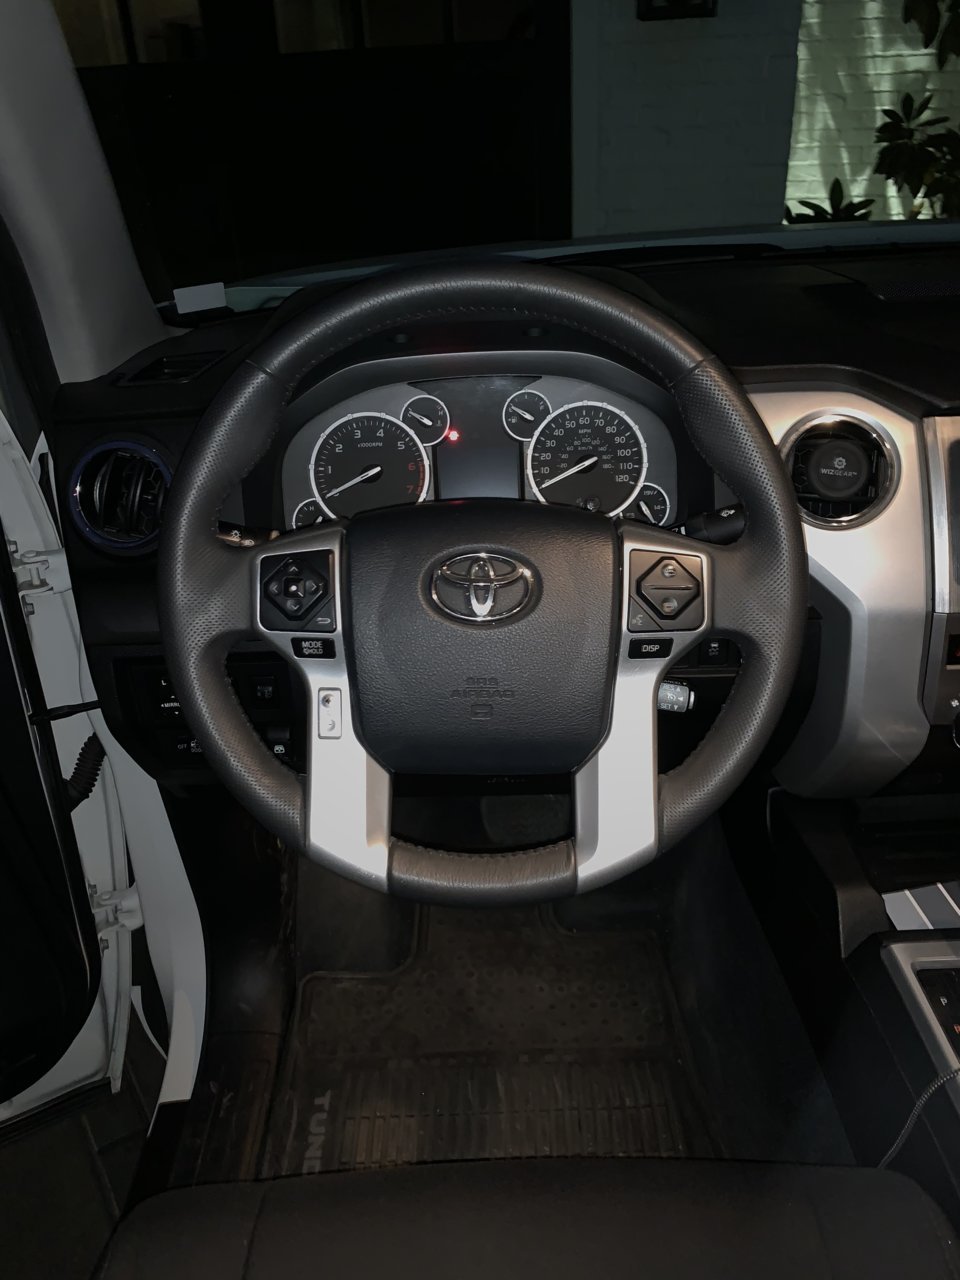 Tacoma steering wheel in Tundra? | Page 2 | Toyota Tundra Forum